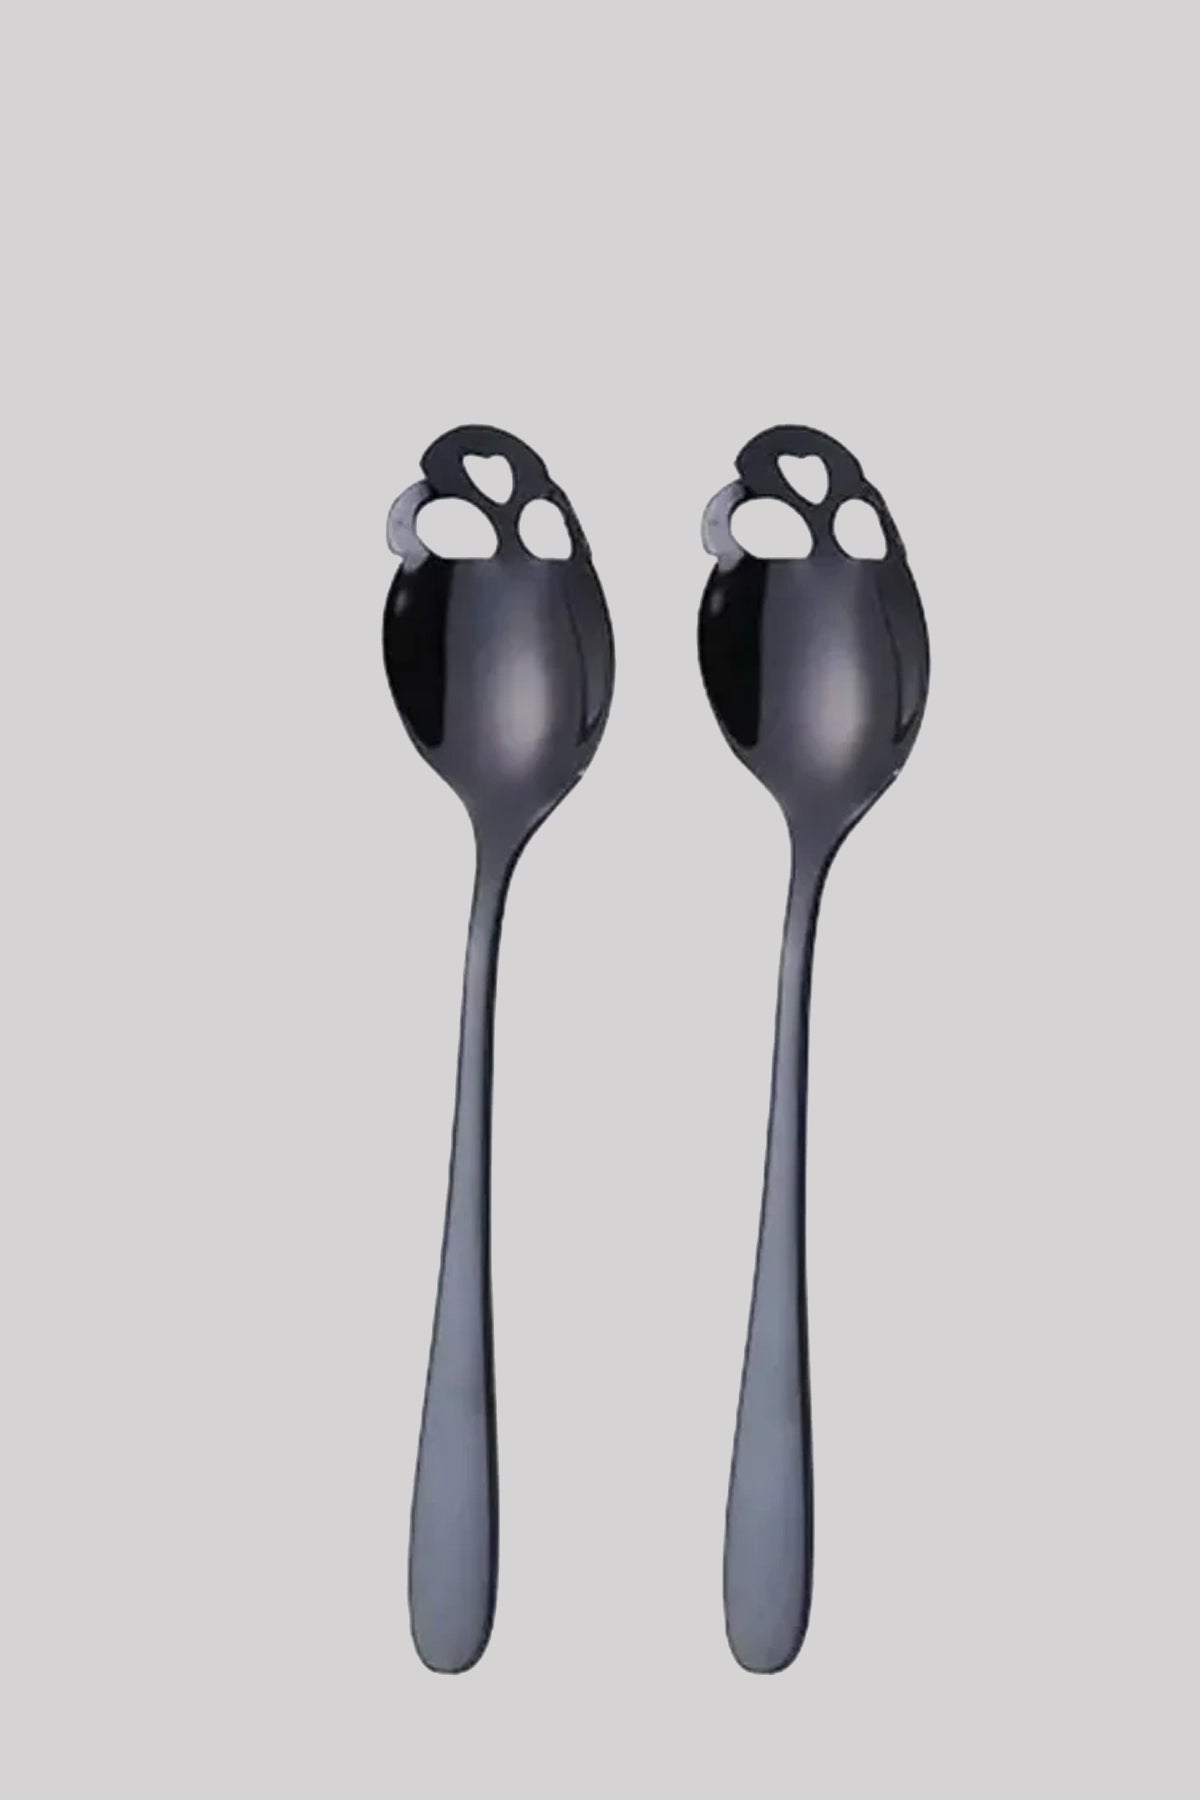 Skull Shaped Tea Spoons Gothic Kitchenware